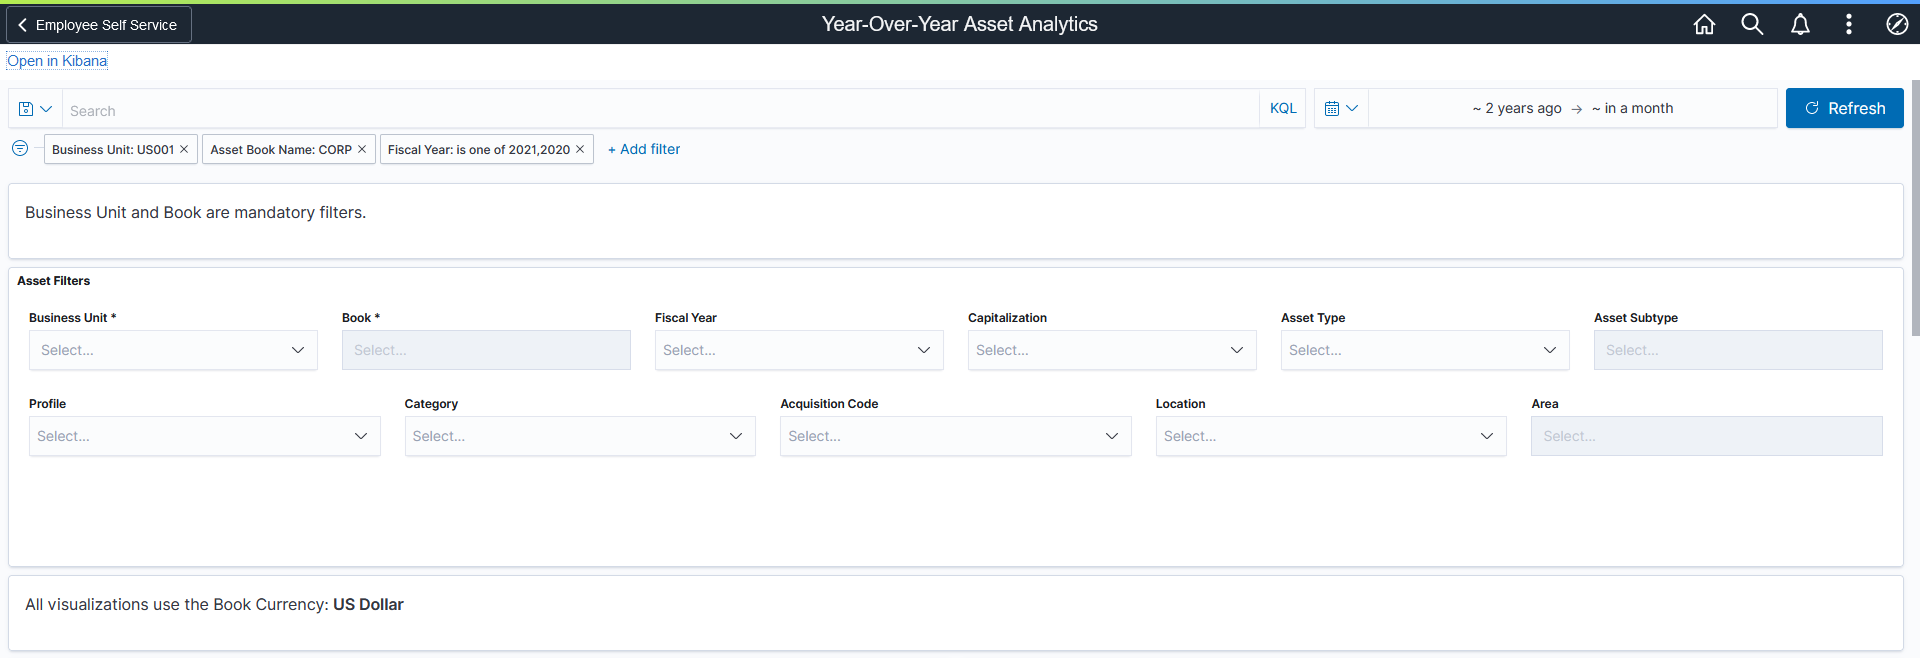 Year-Over-Year Asset Analytics Dashboard (1 of 4)